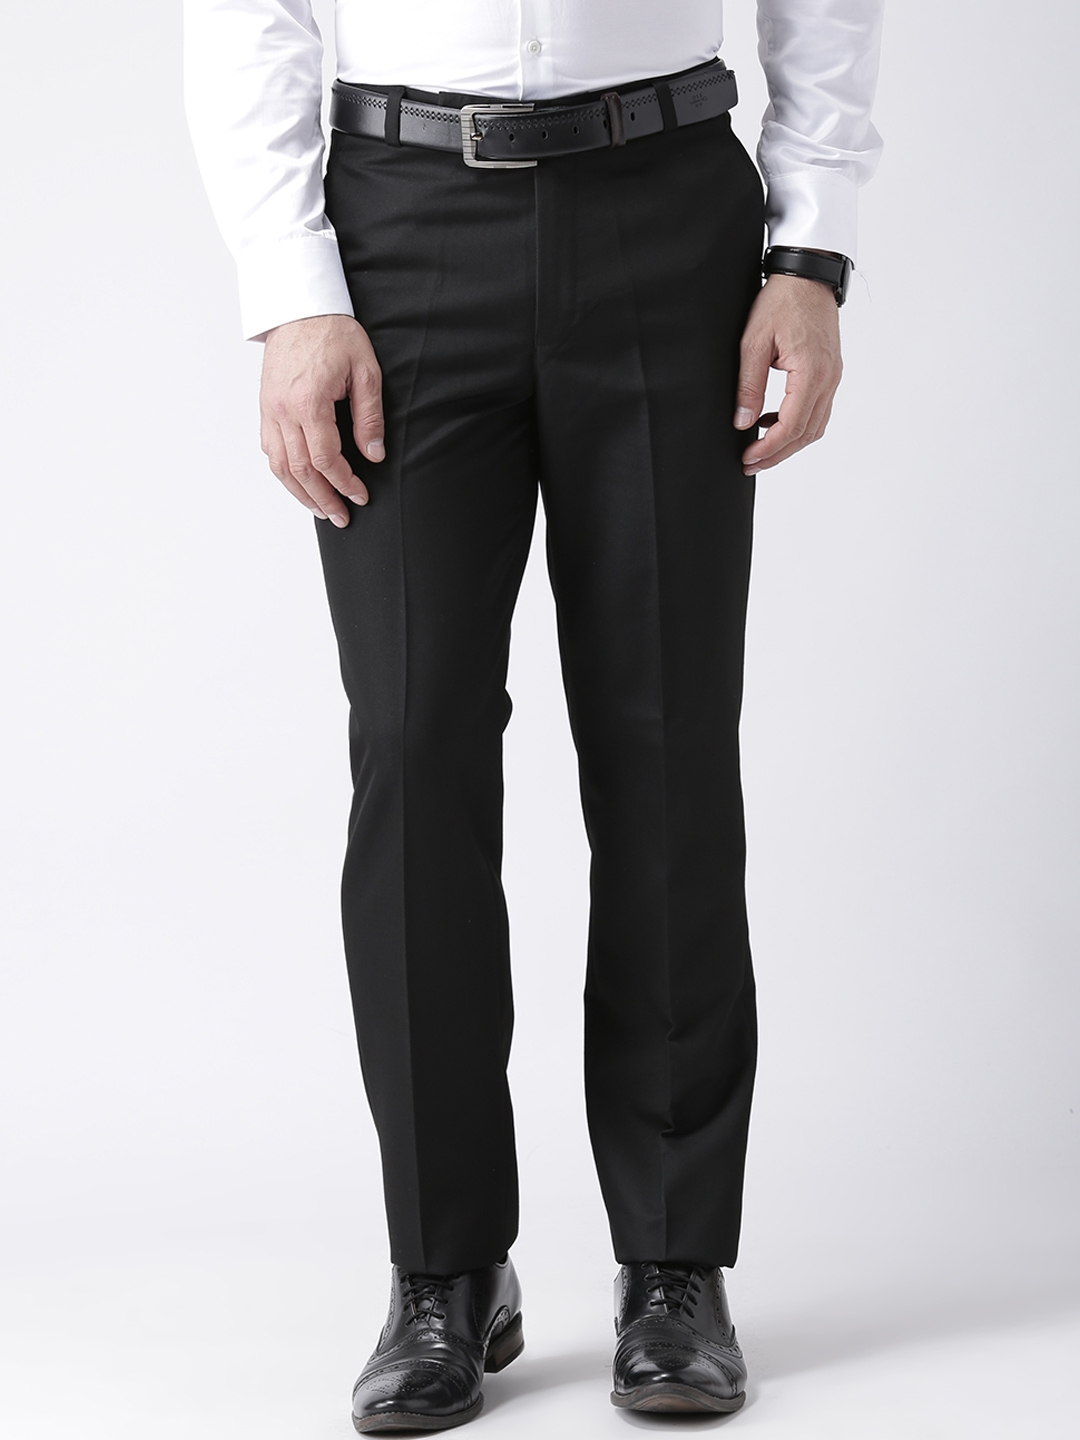 Slim Fit Trousers - Black - Men | H&M IN-saigonsouth.com.vn